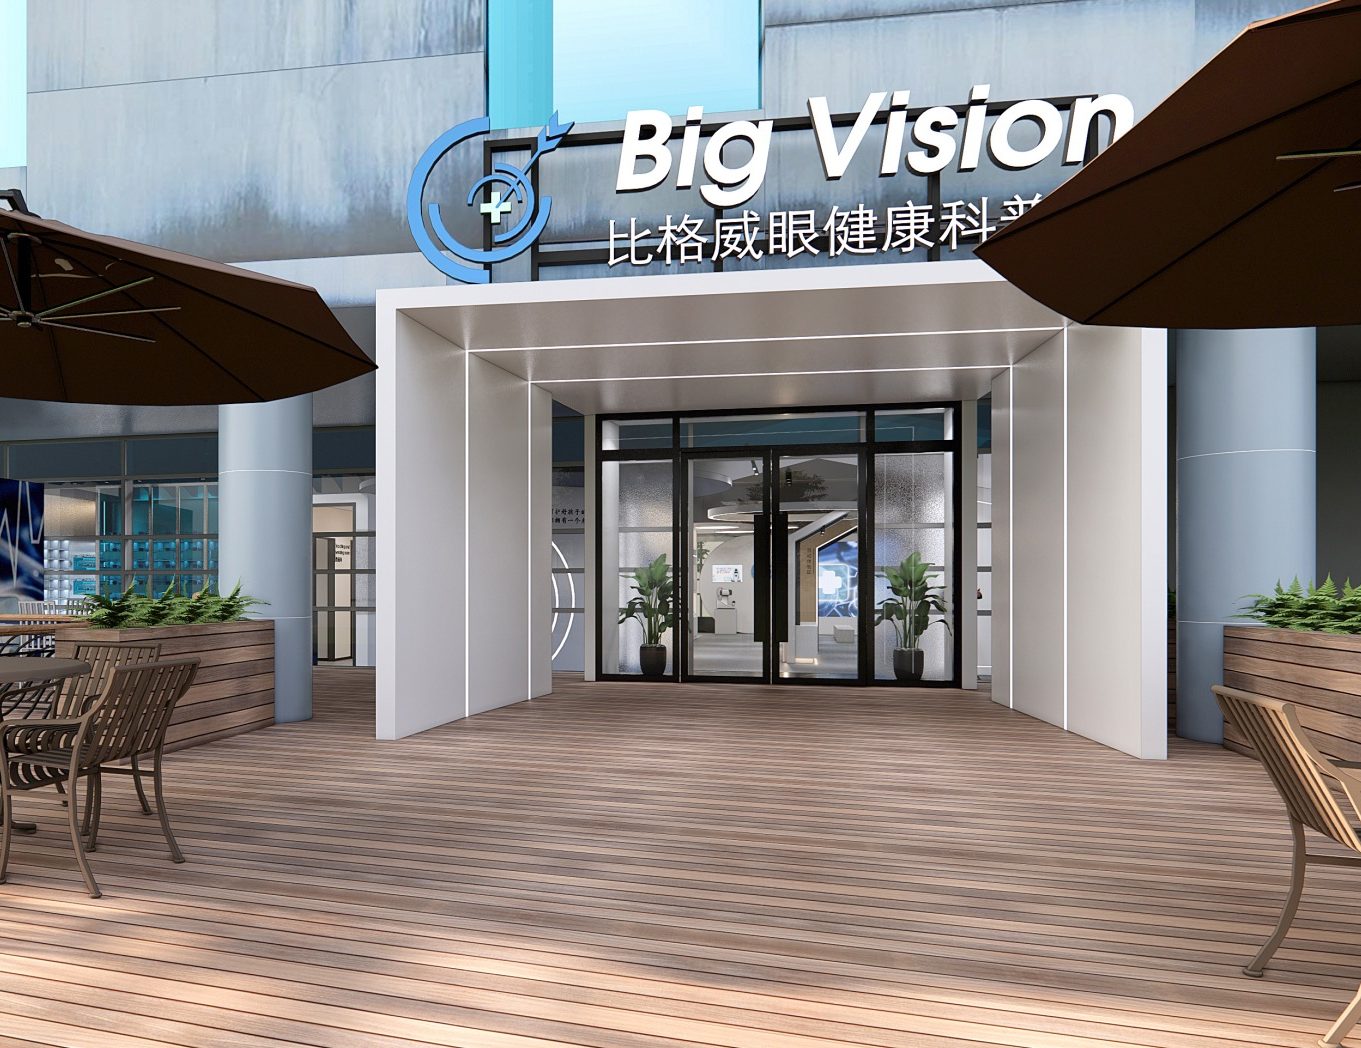 Big Vision Eye Health Science Center